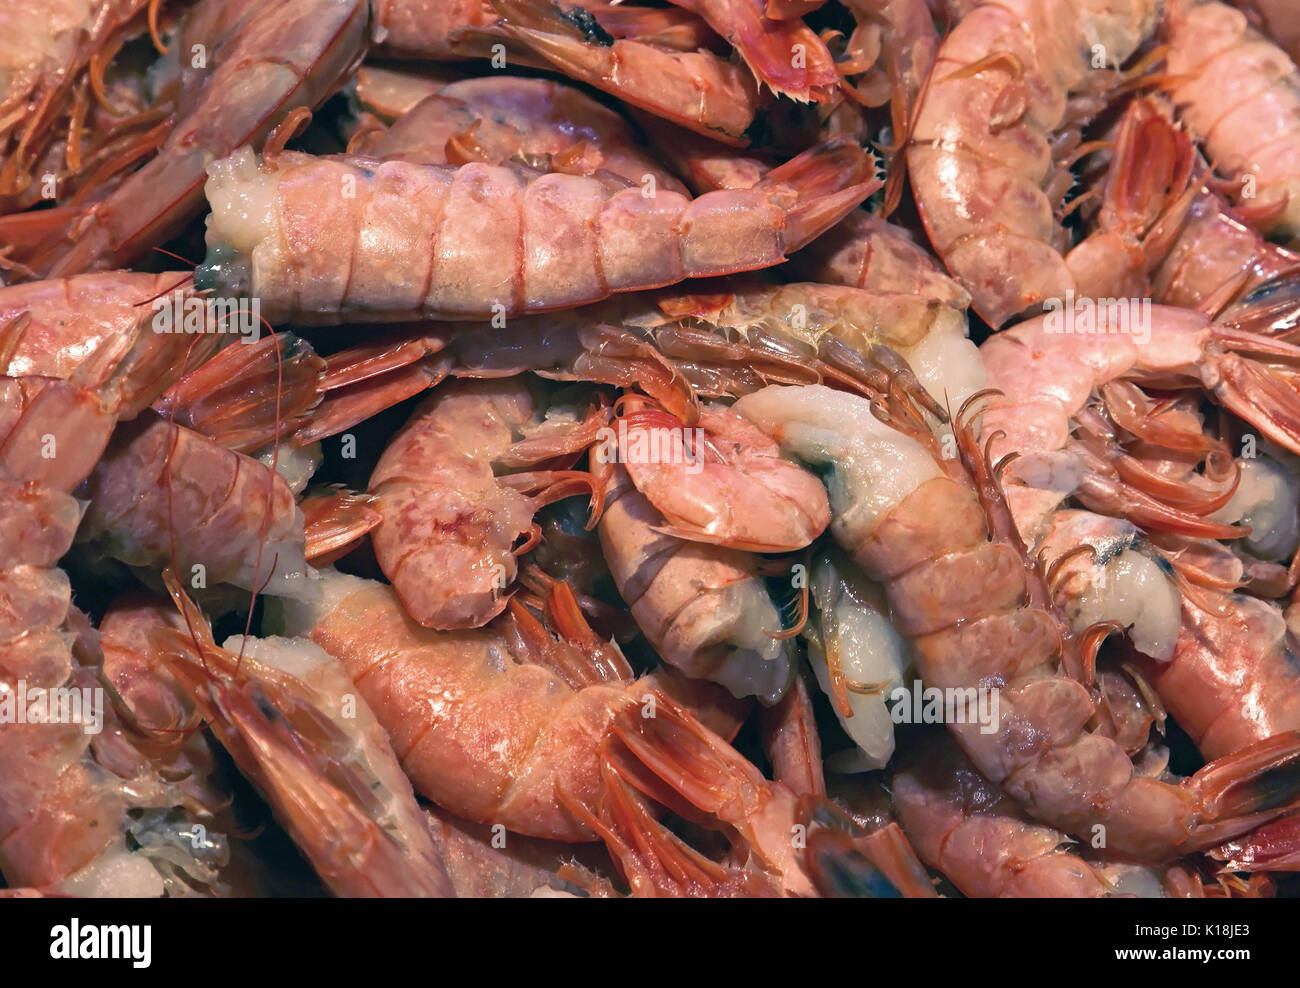 Large pile of freshly caught live shrimps Stock Photo